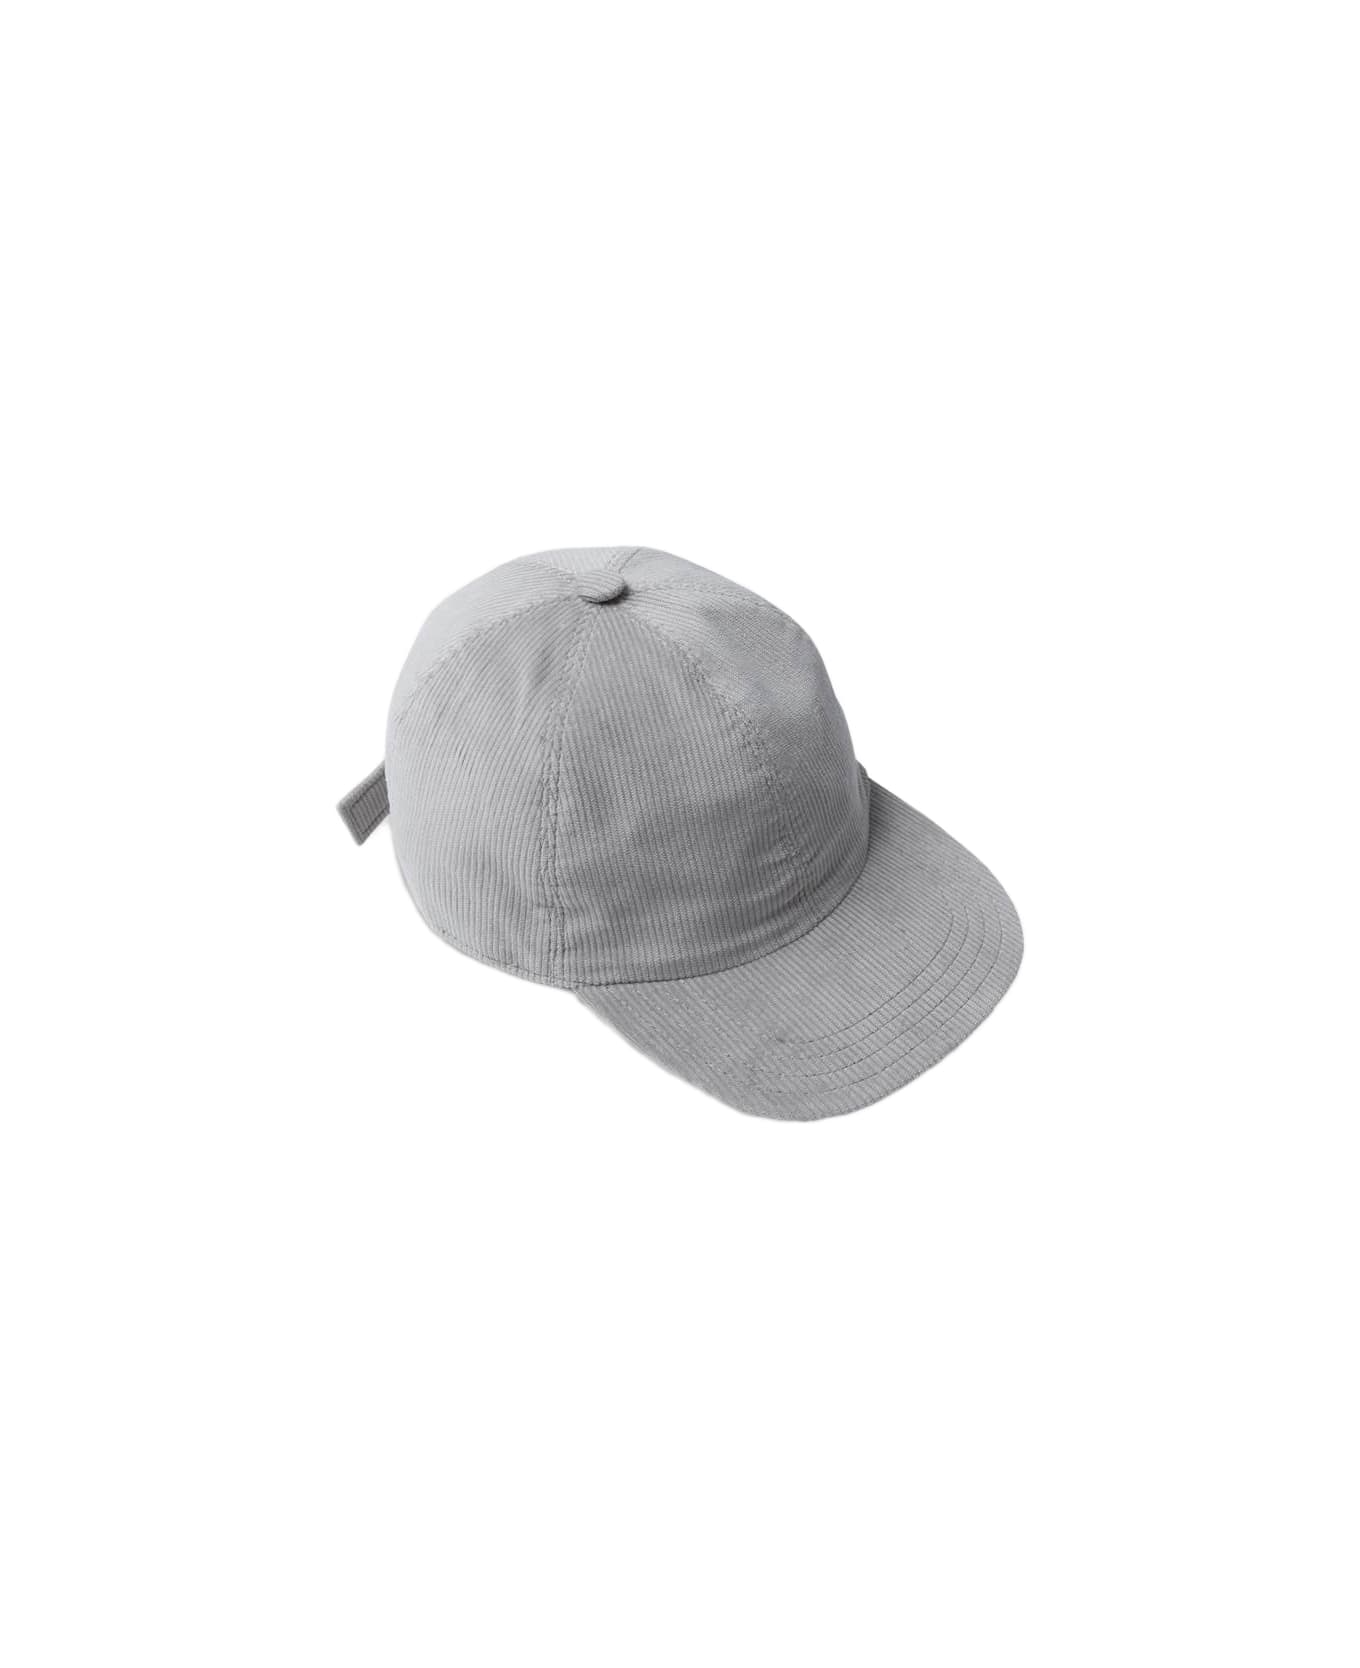 Larusmiani Baseball Cap Hat - LightGray 帽子